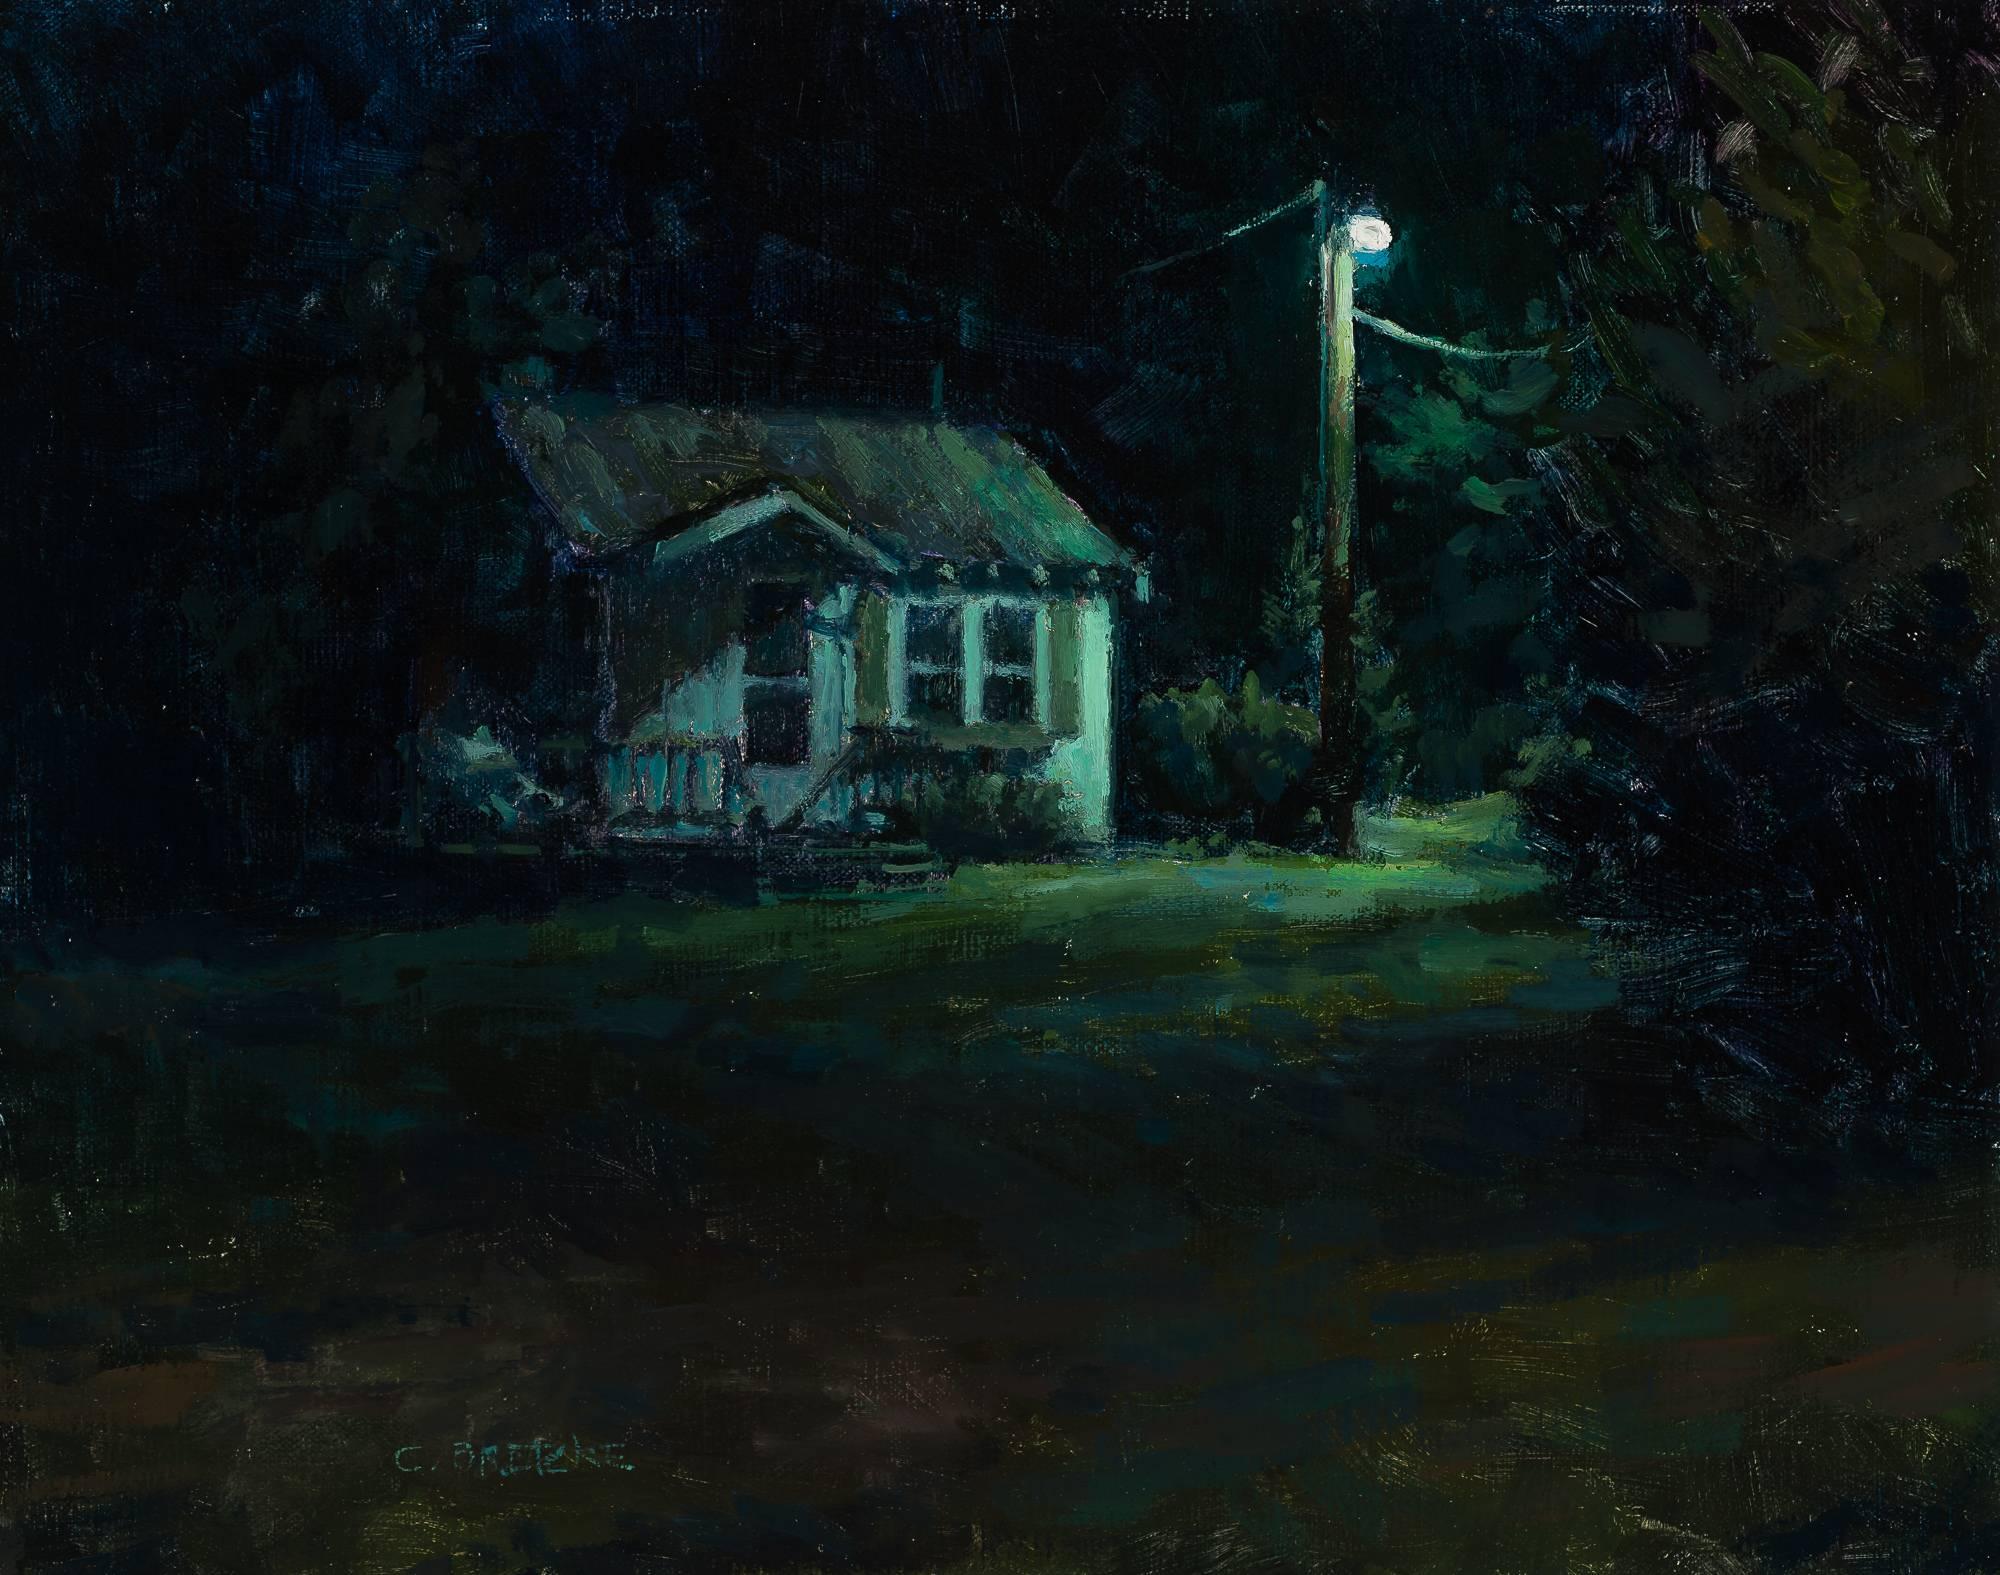 Carl Bretzke Landscape Painting - Cool Light on the White Cabin